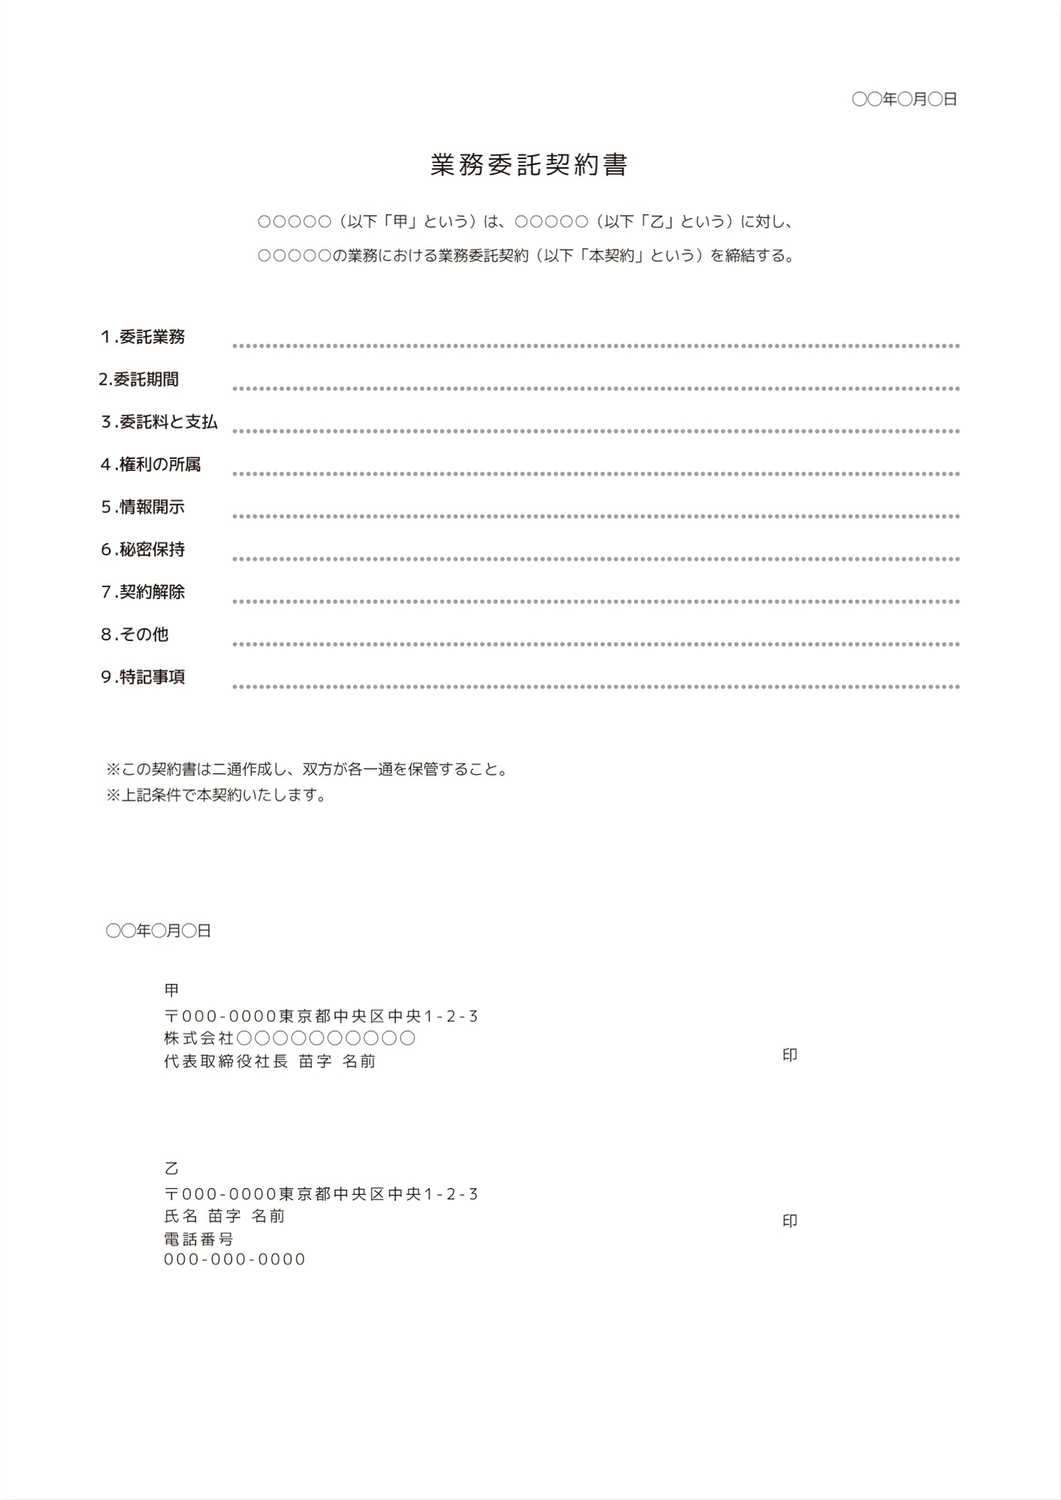 業務委託契約書, horizontal writing, president, Full name, A4 template